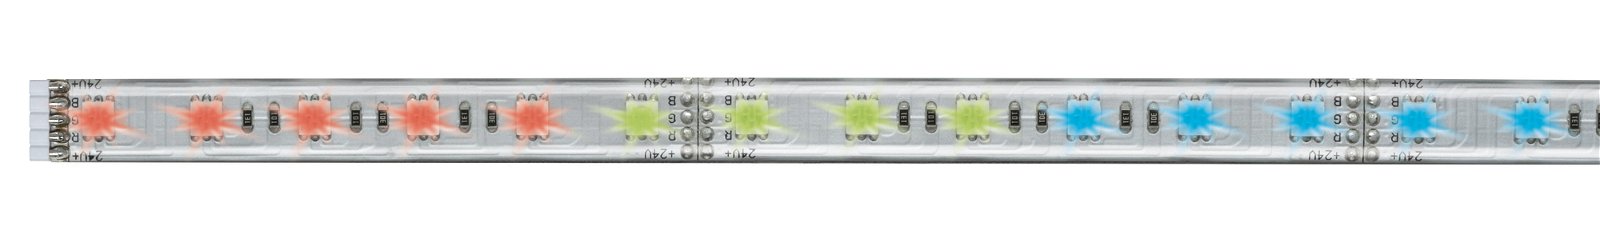 MaxLED 500 LED Strip RGB Einzelstripe 1m beschichtet 13,5W 420lm/m RGB